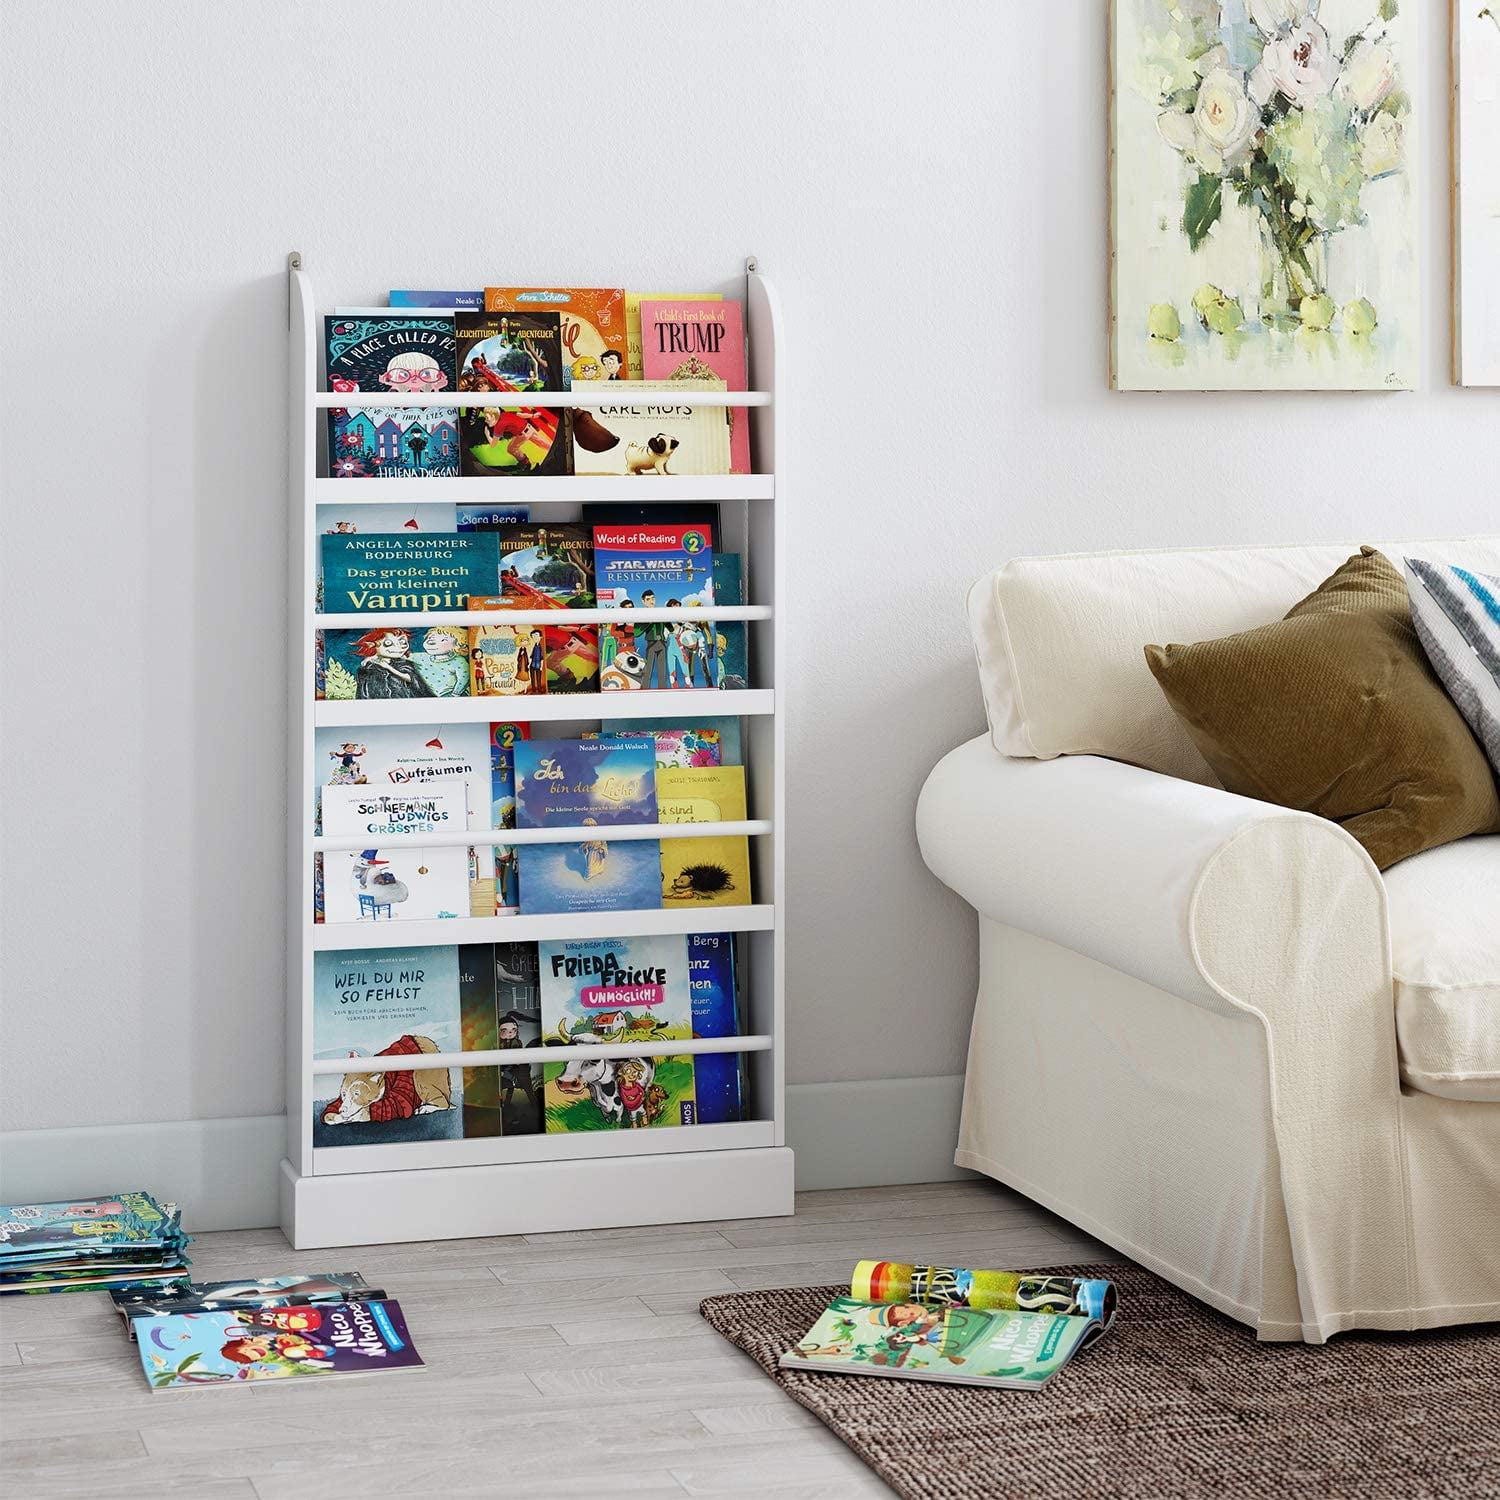 New Design Kids Childrens Bookcase Bookshelf Blue/Pink Storage Rack Organiser 